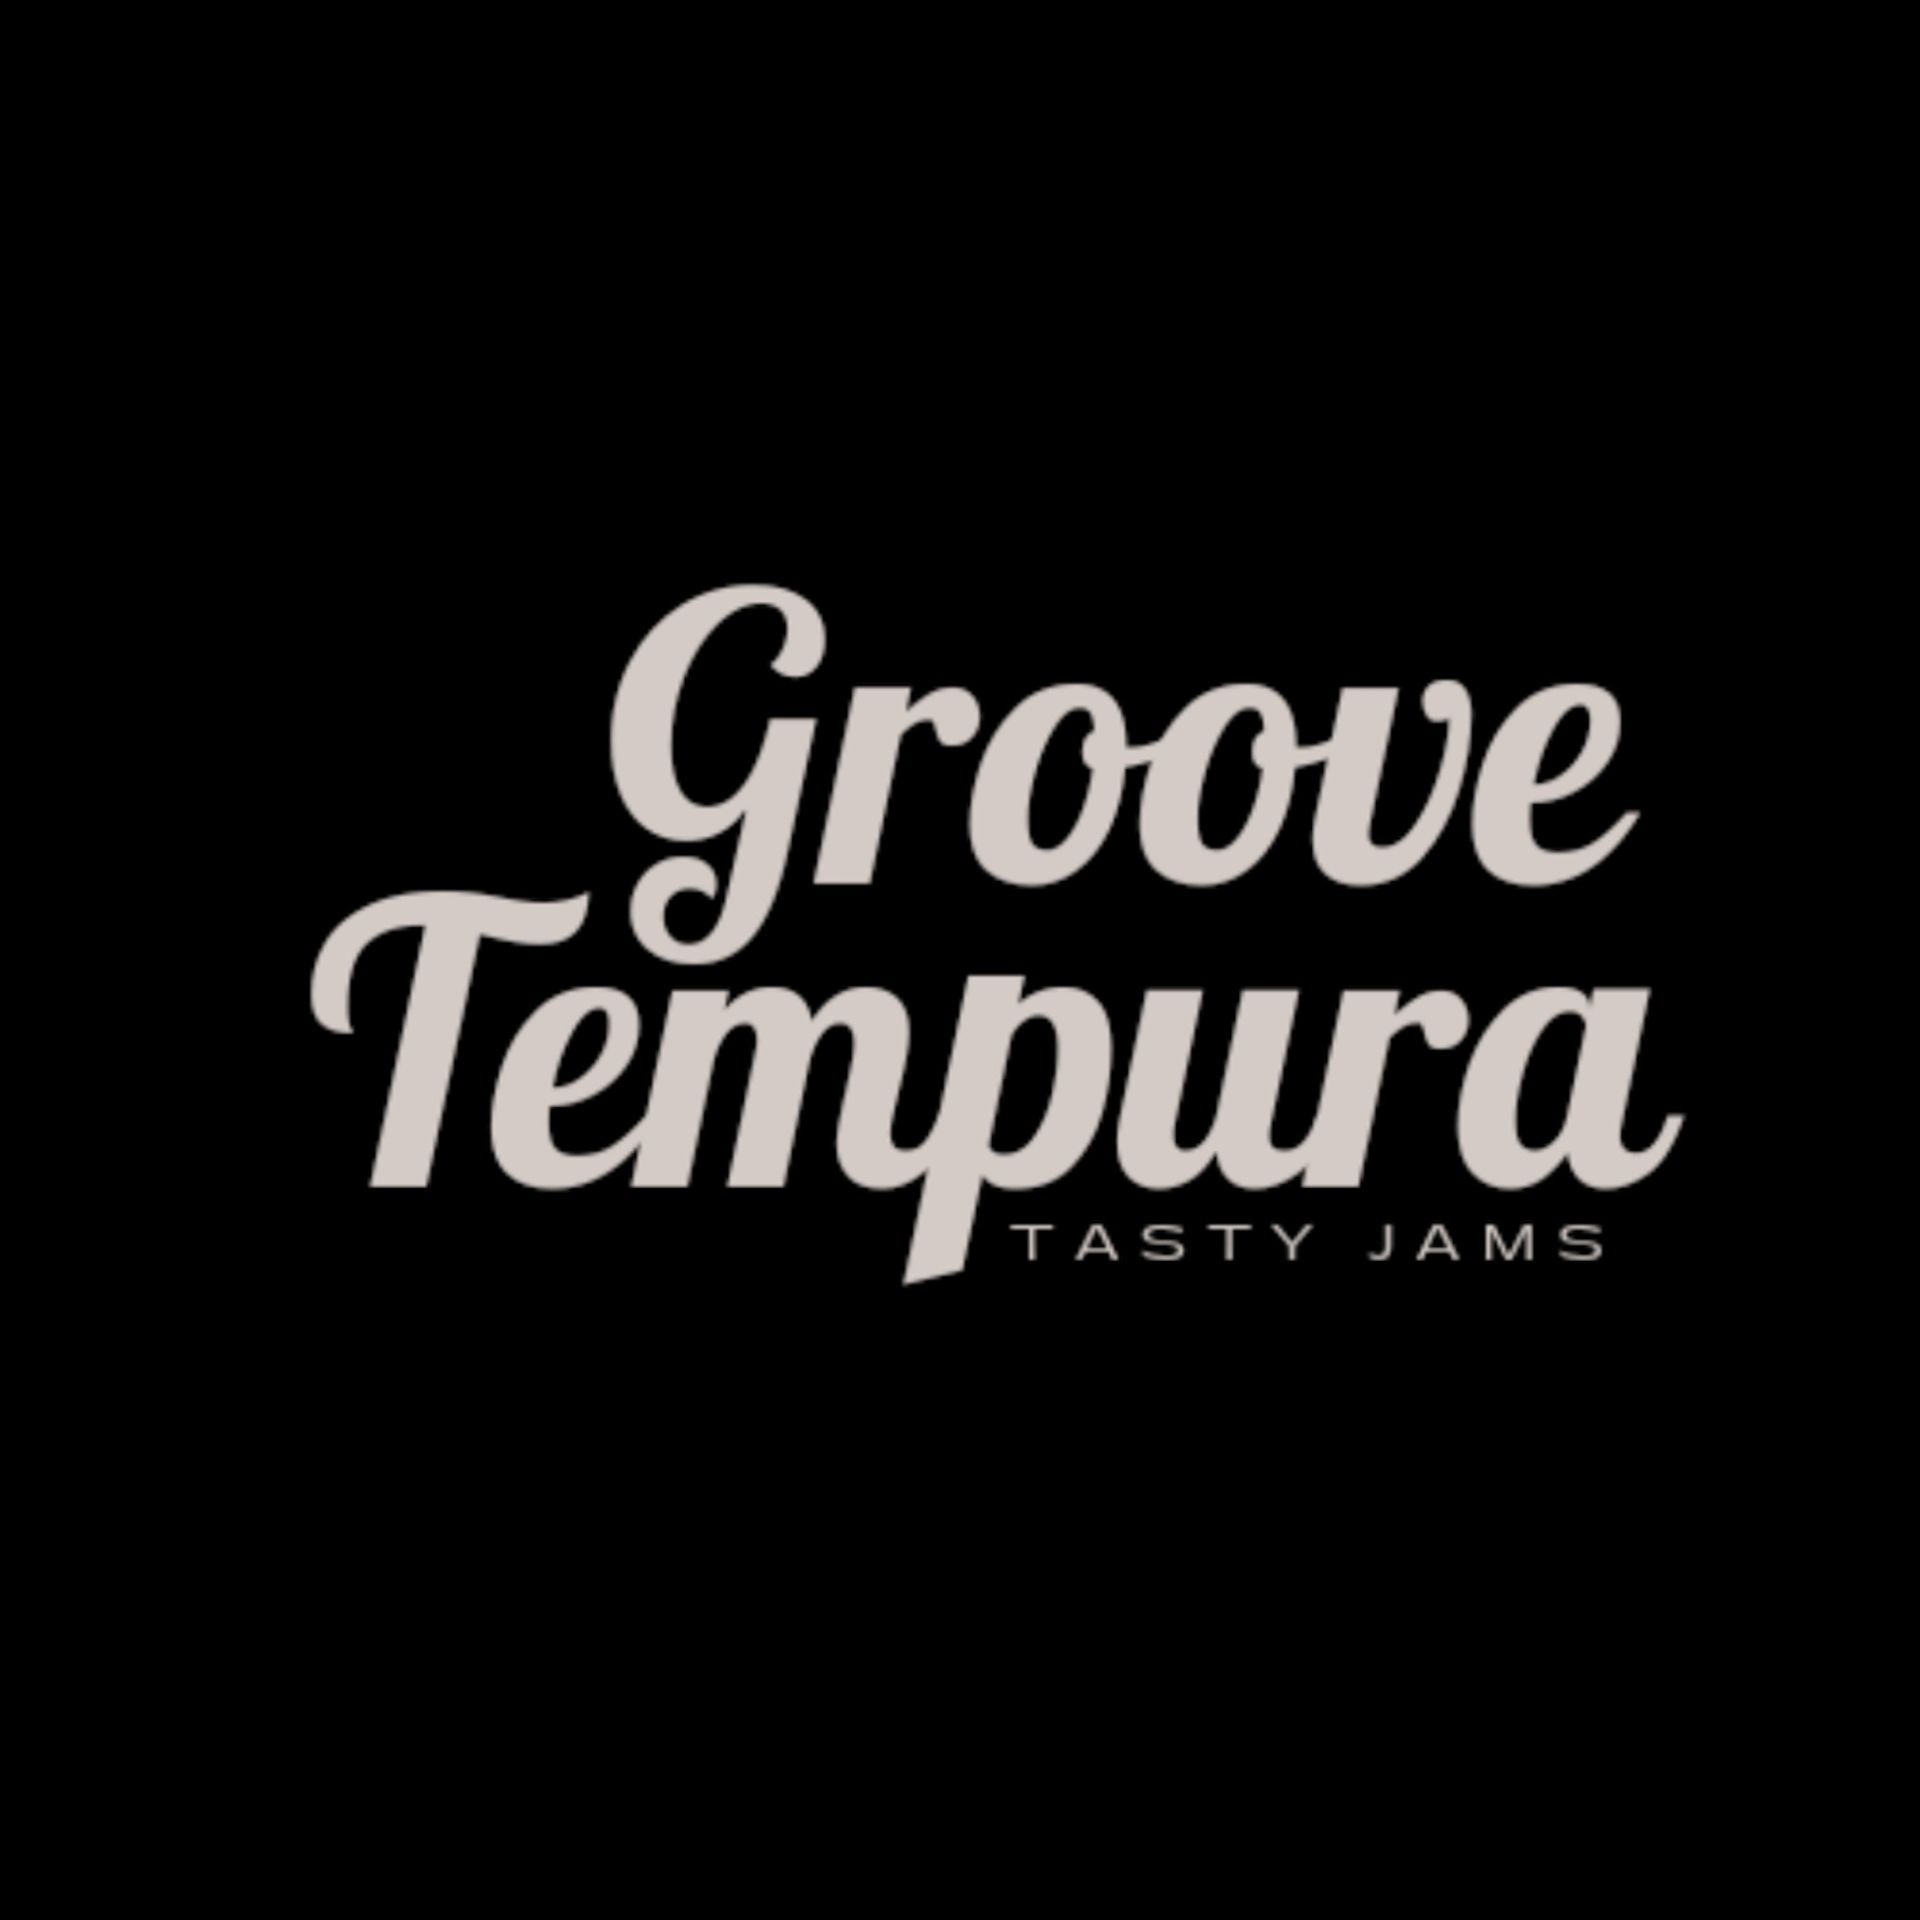 Groove Tempura